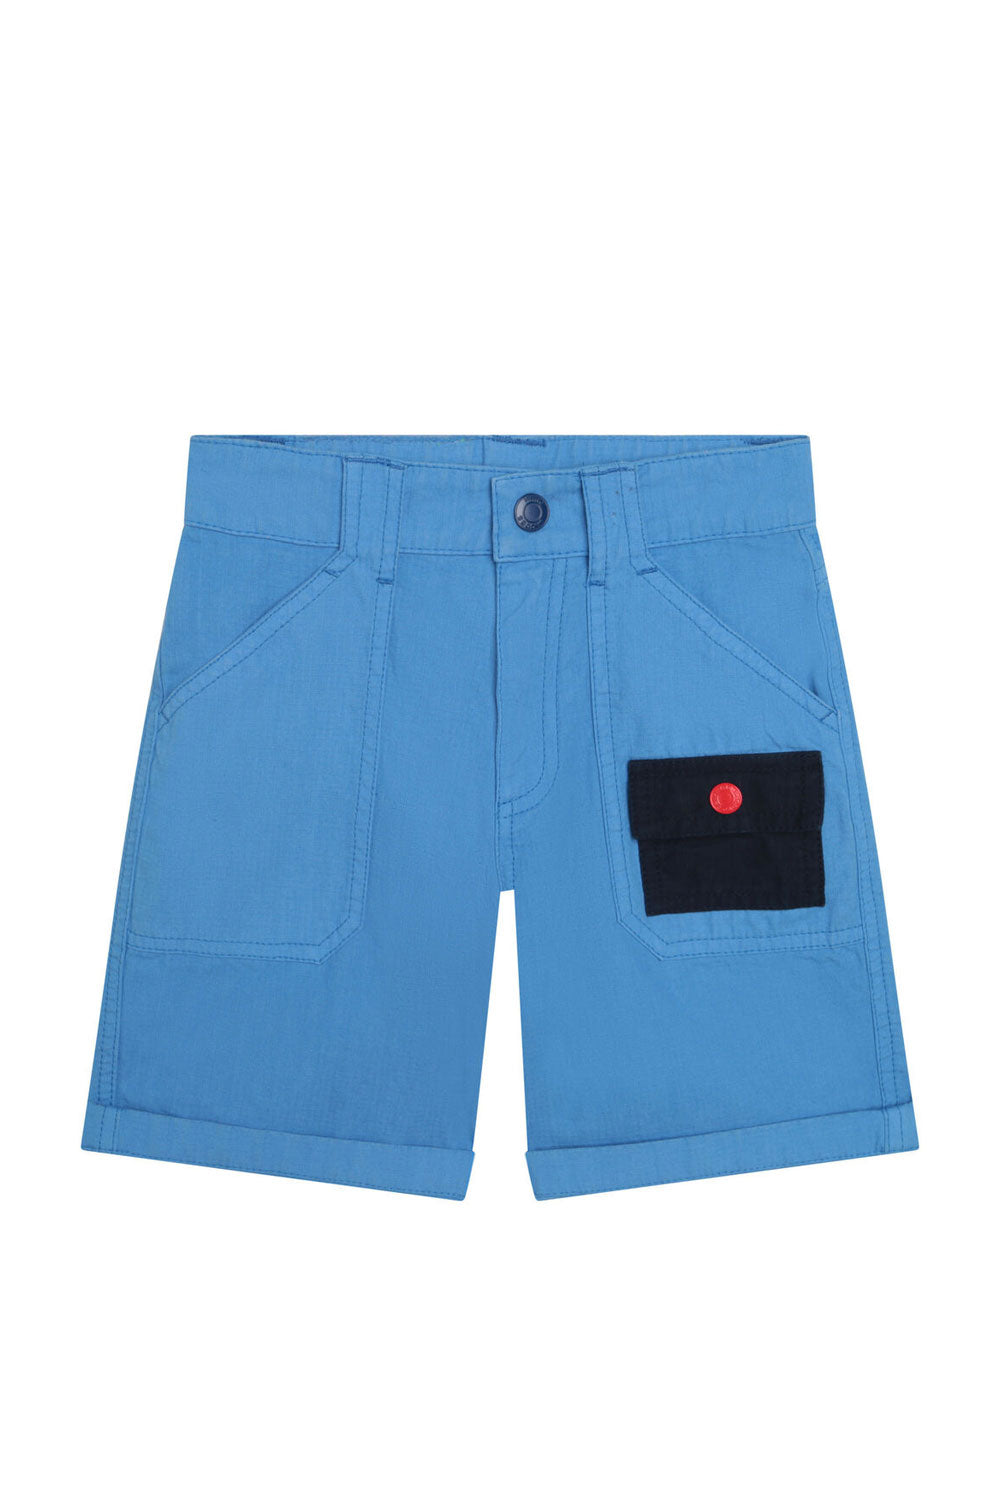 Chino Pocket Shorts for Boys Chino Pocket Shorts for Boys Maison7